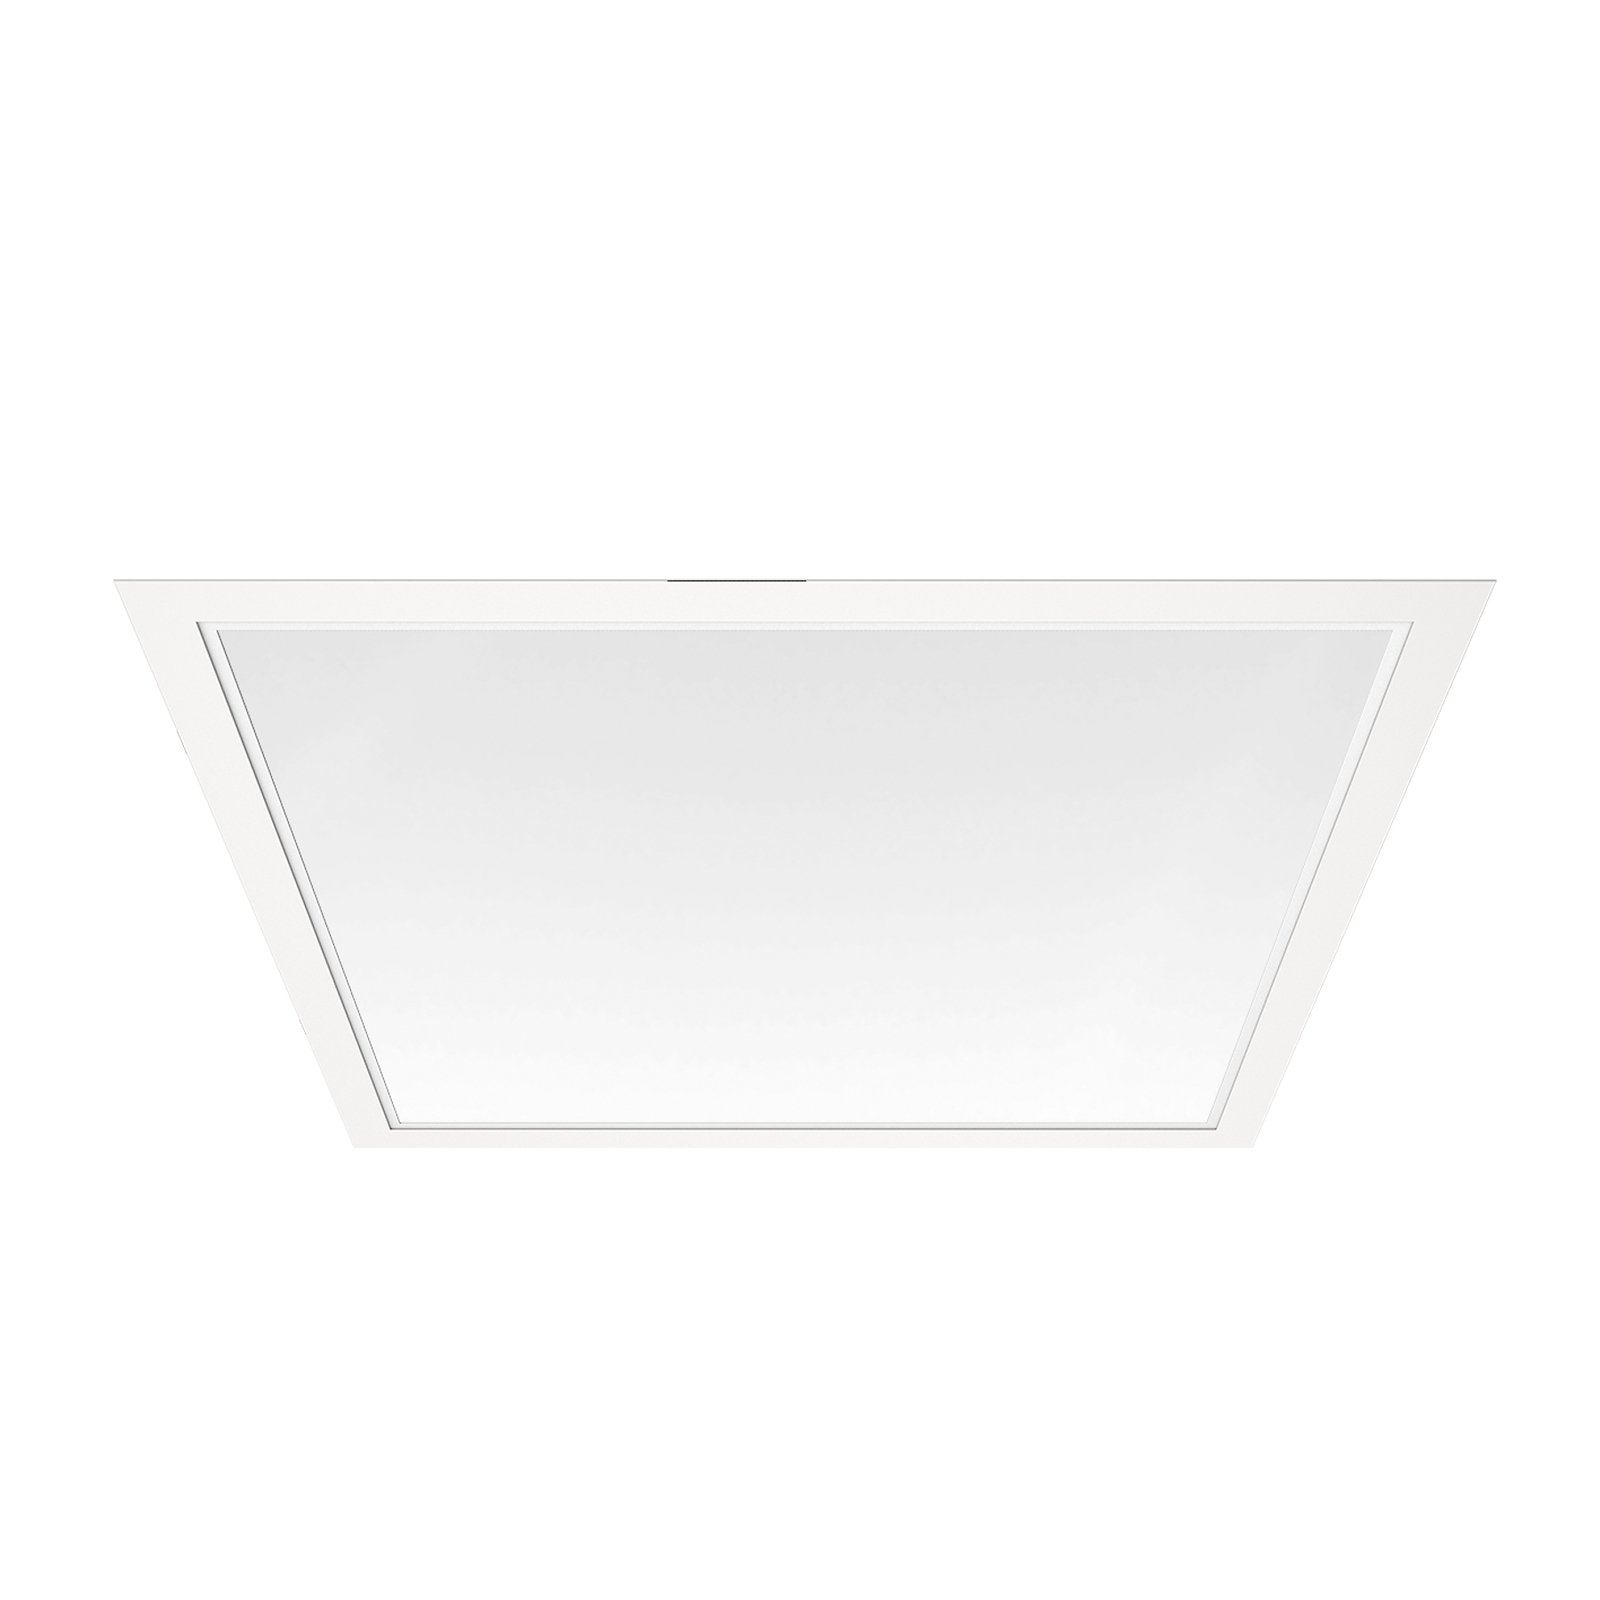 Panel LED lowea LOEO 62,5cm 4800-3800lm 830 bianco